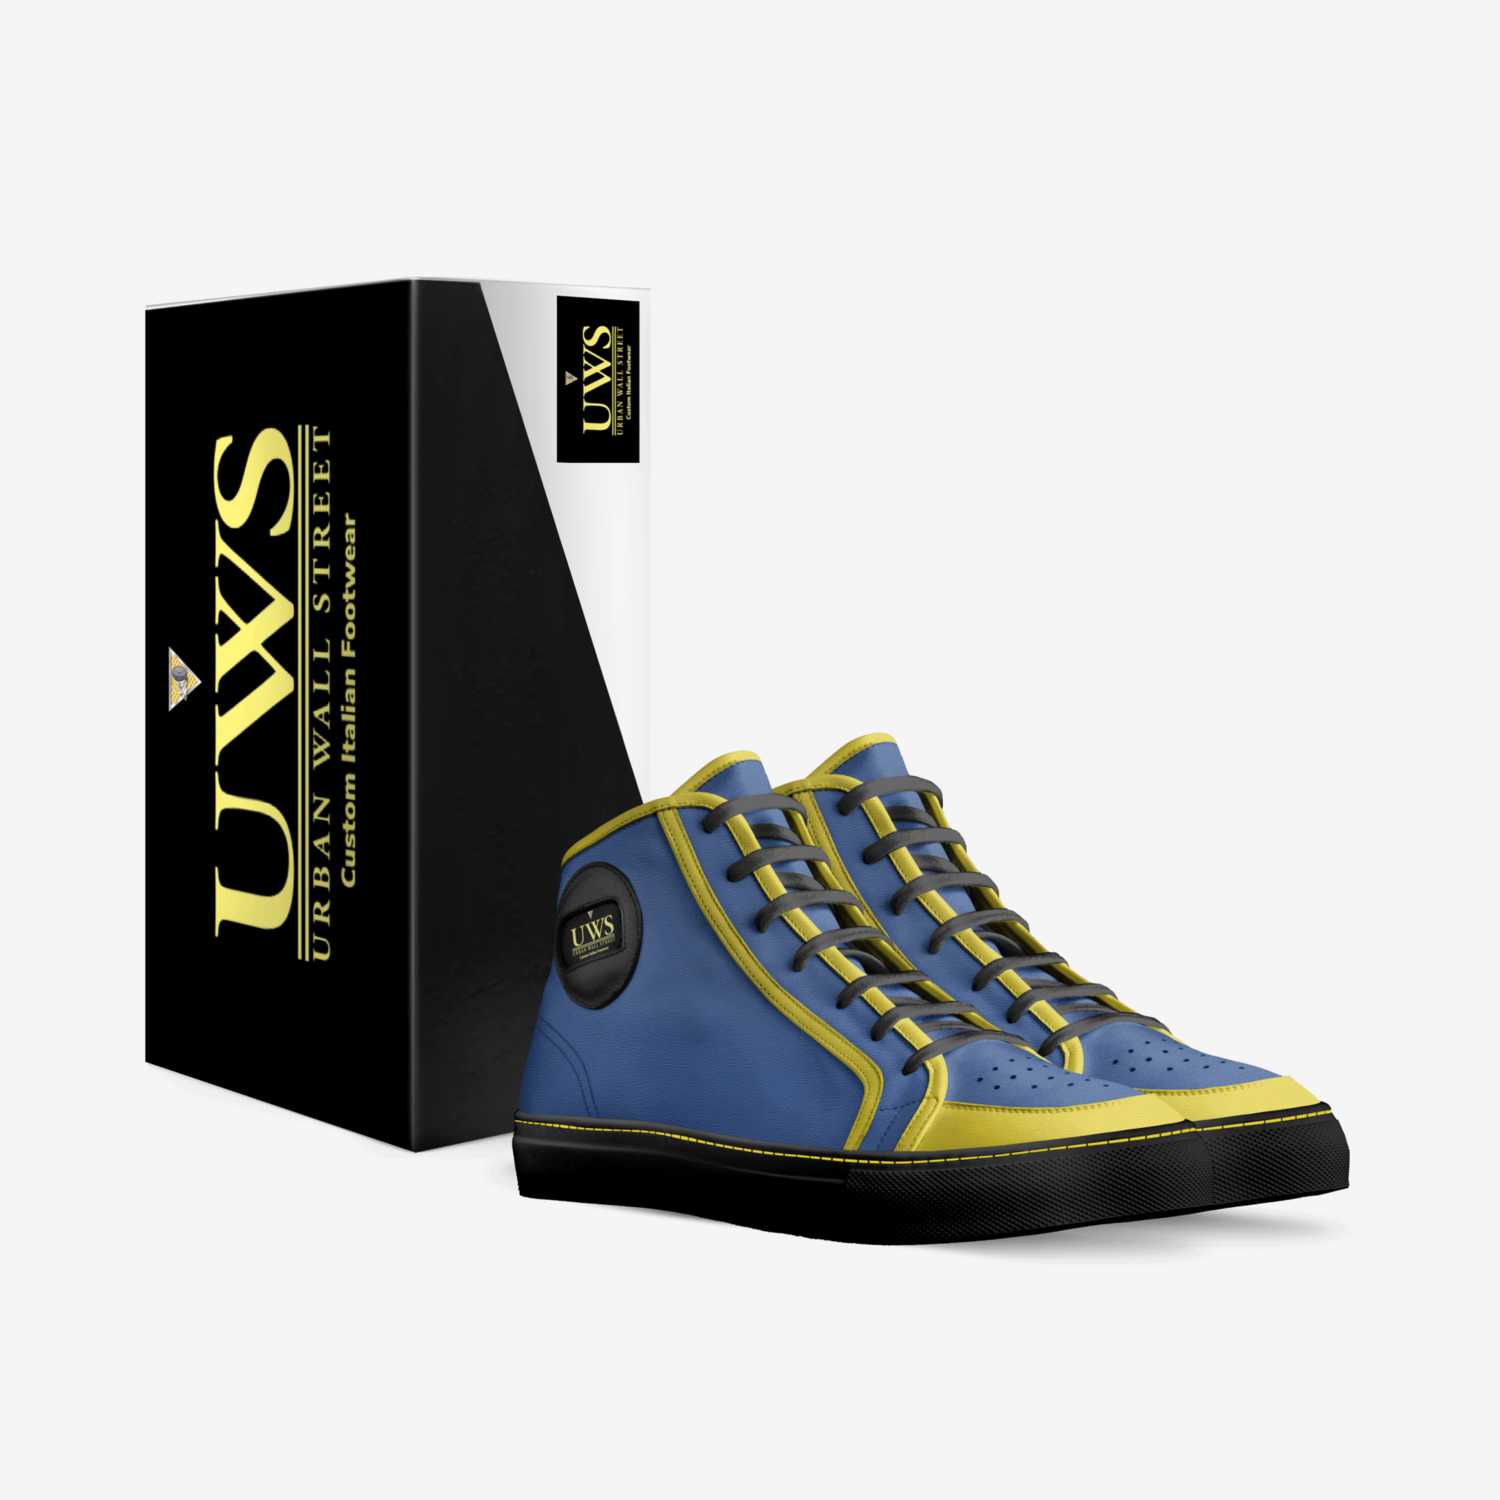 Watson Avez custom made in Italy shoes by Urbanwallstreet Earl | Box view